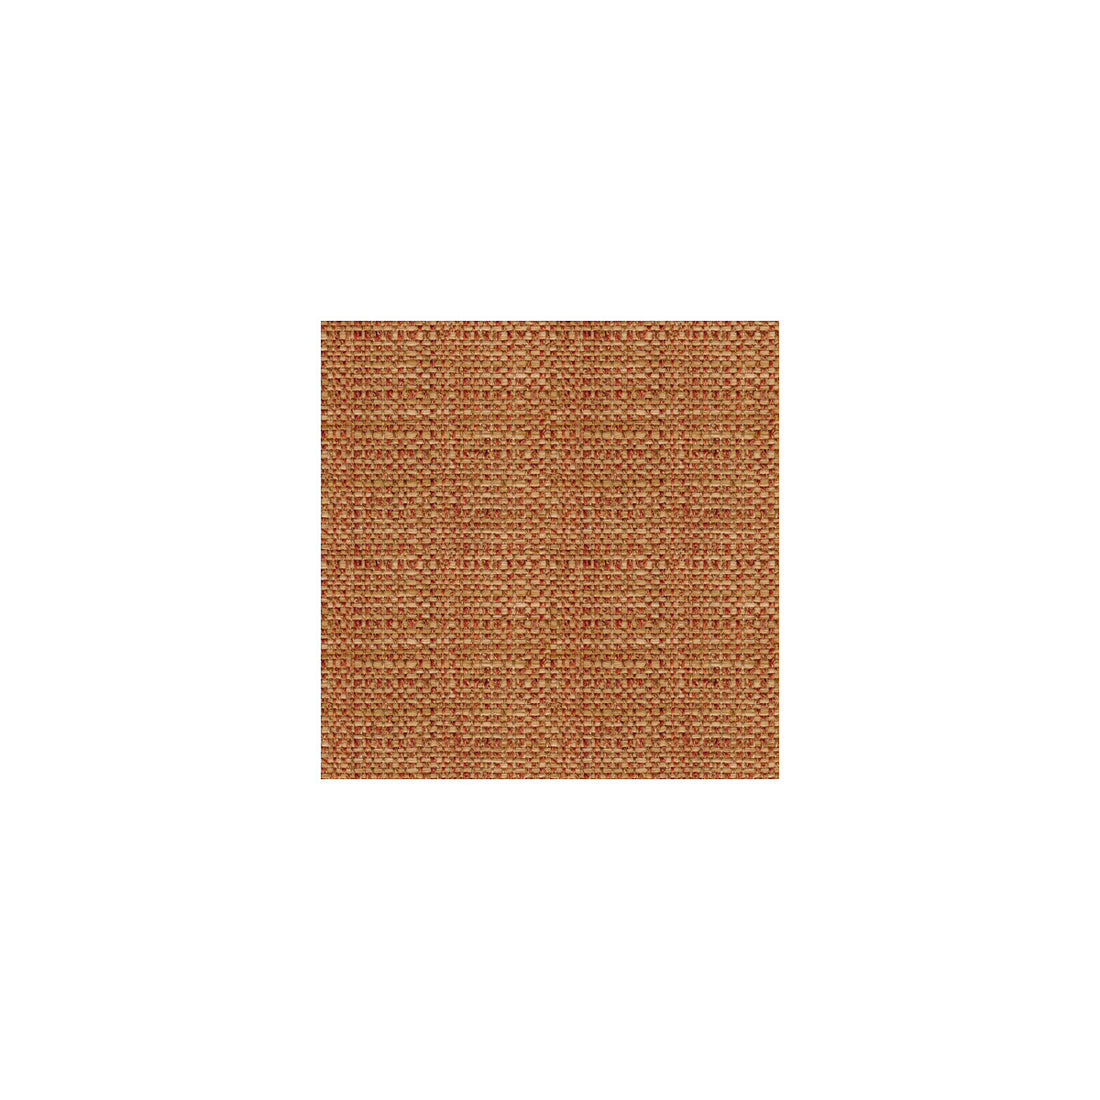 Kravet Smart fabric in 30667-412 color - pattern 30667.412.0 - by Kravet Smart